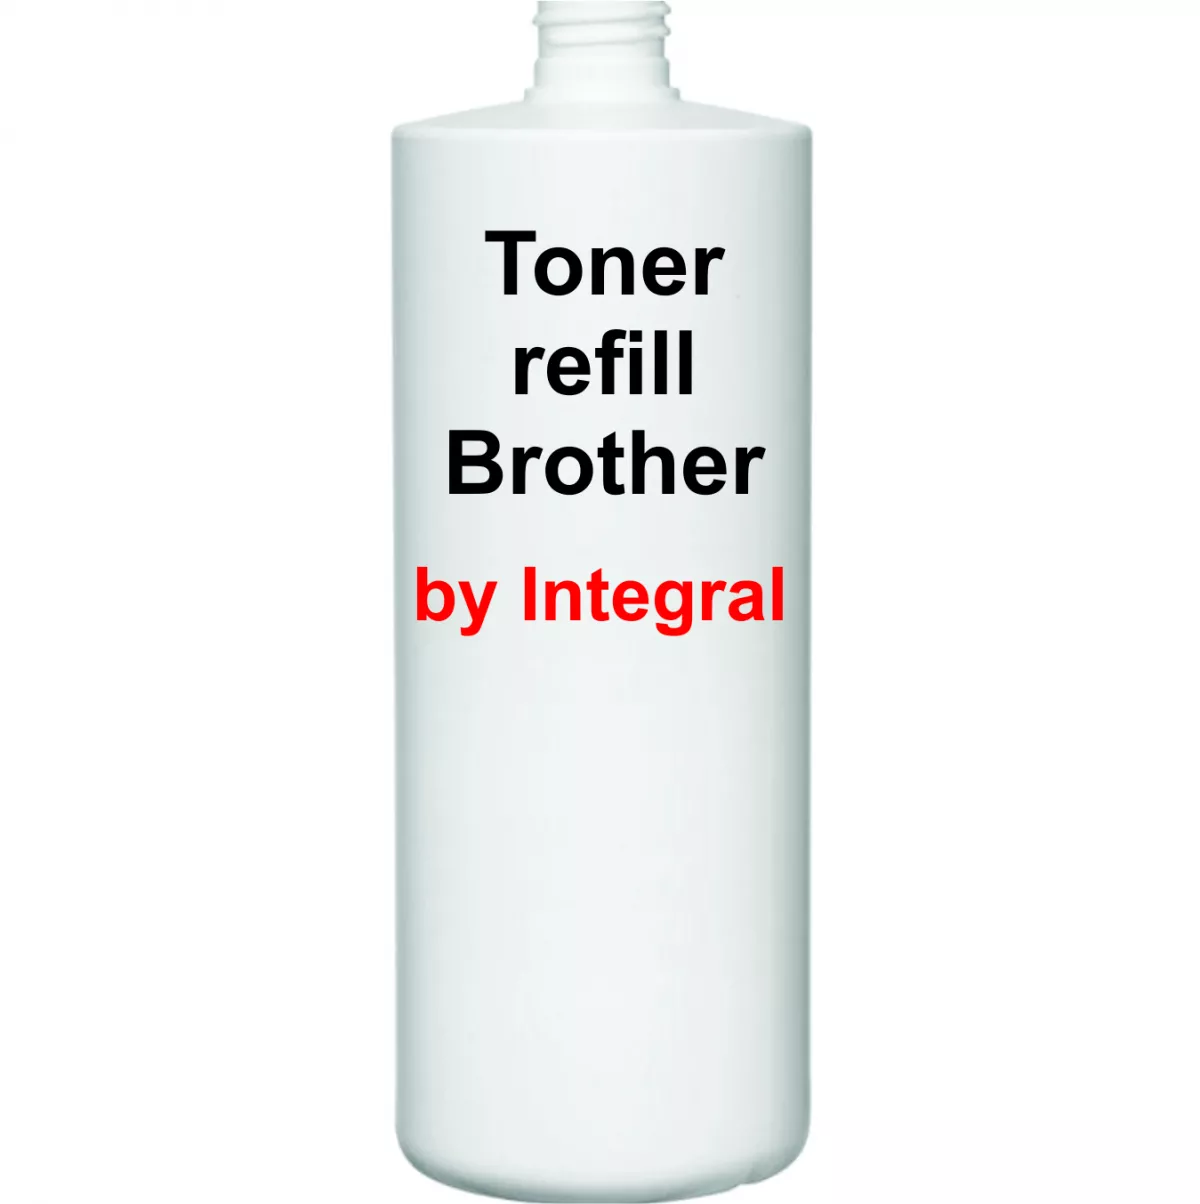 Toner refill Brother TN1090 TN-1090 1000g by Integral